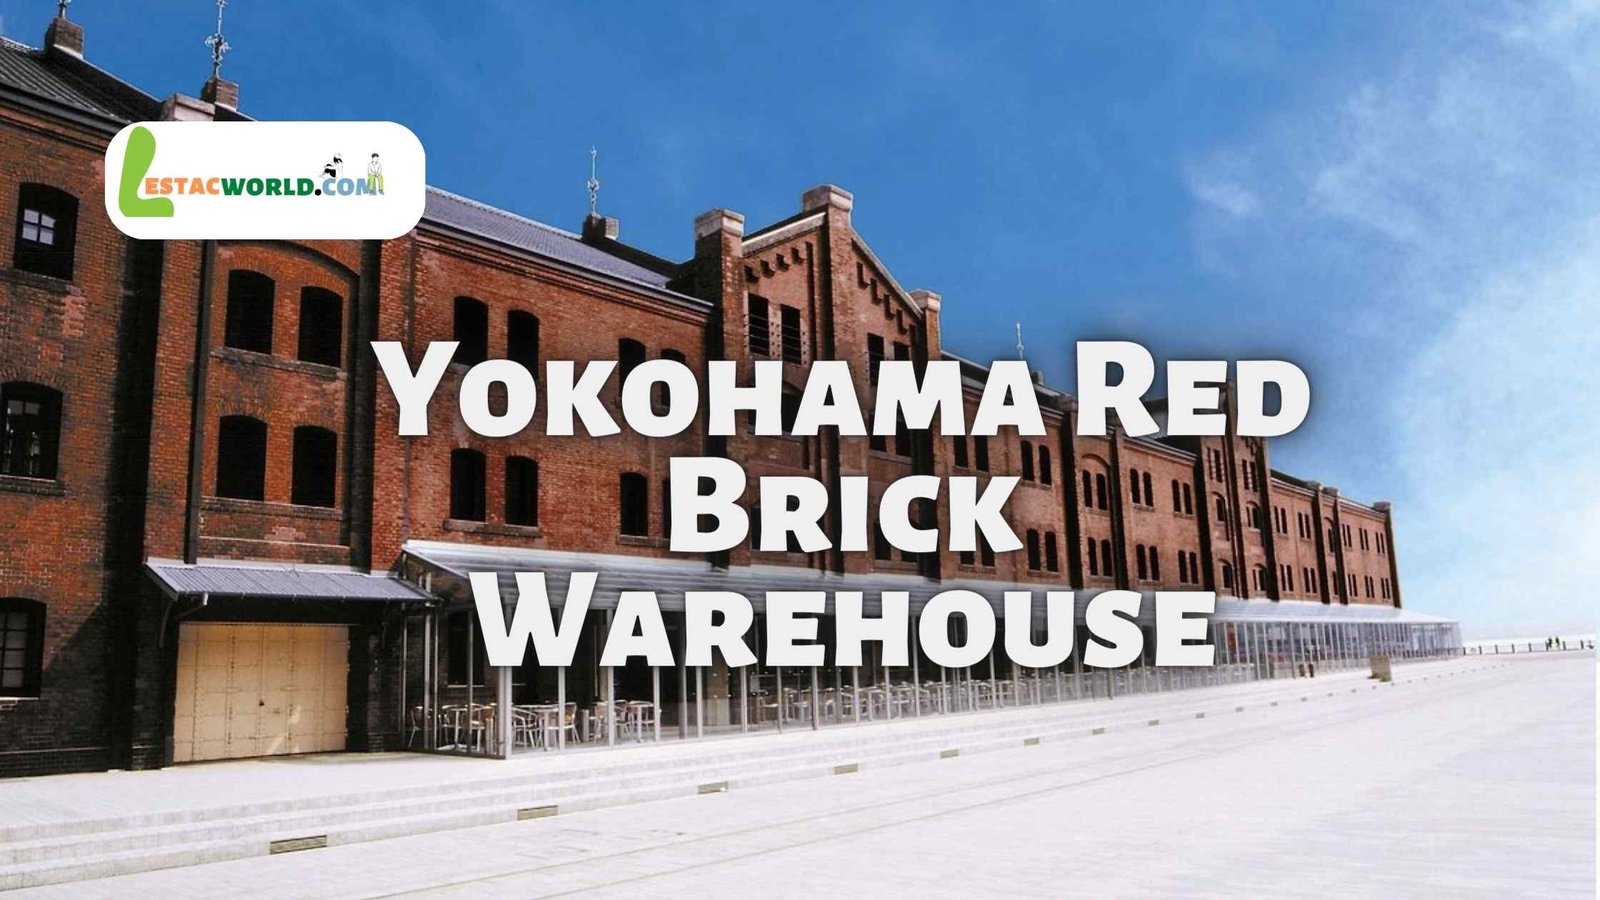 About Yokohama Red Brick Warehouse